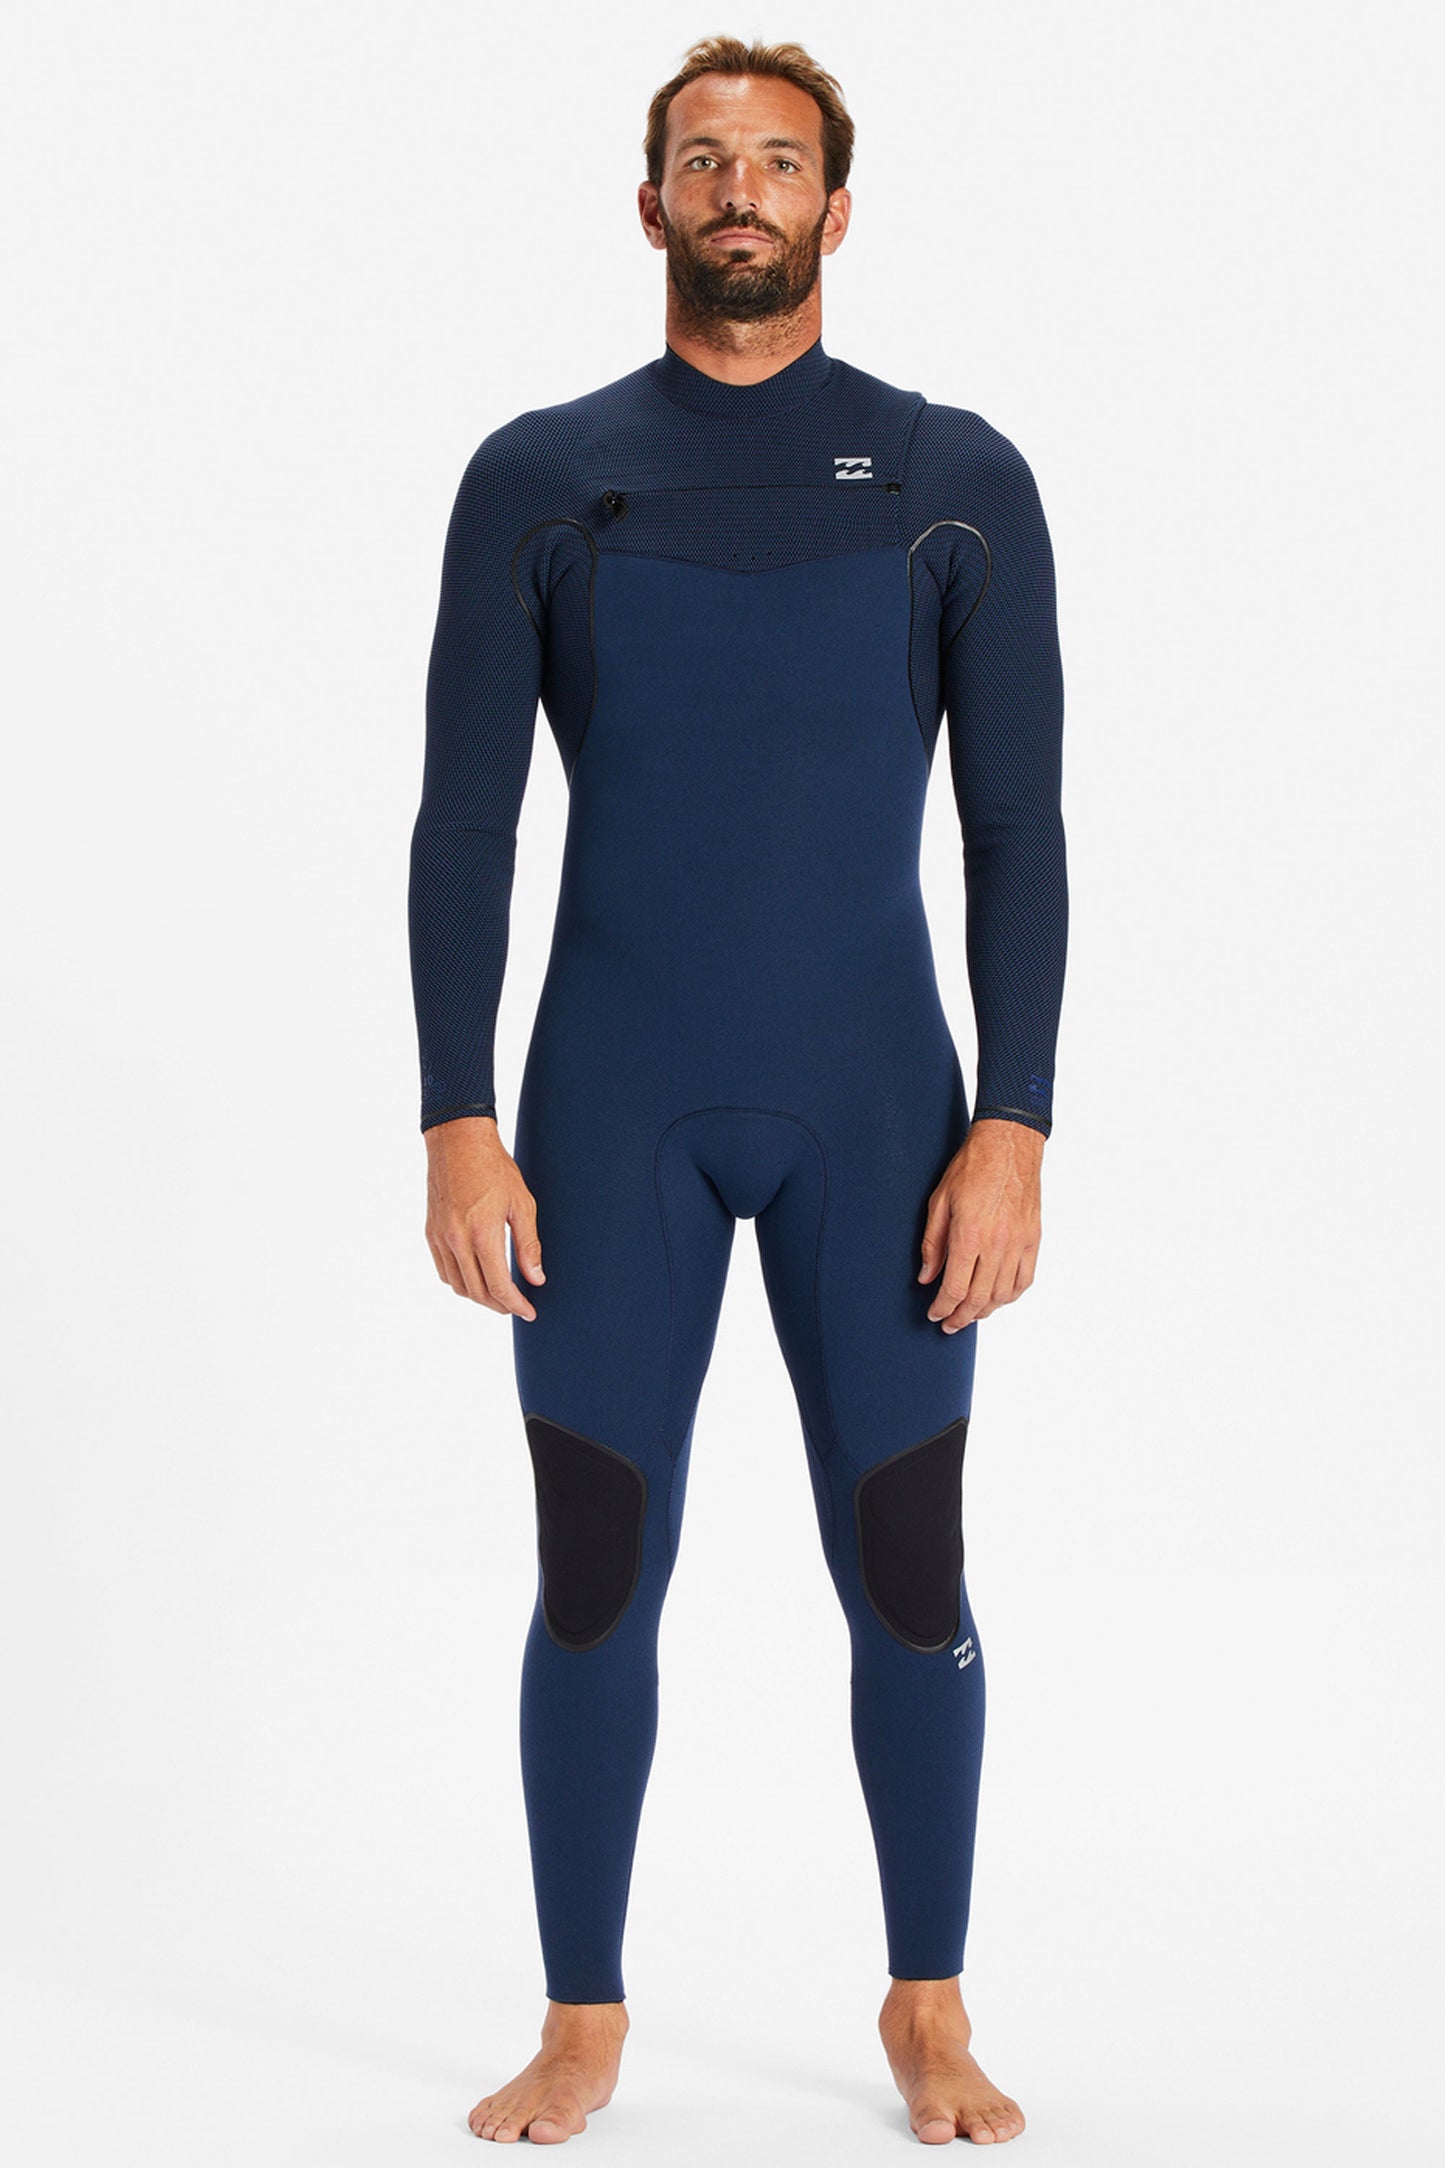 Pukas-Surf-Shop-billabong-wetsuit-man-4-3-furnace-comp-dark-slate